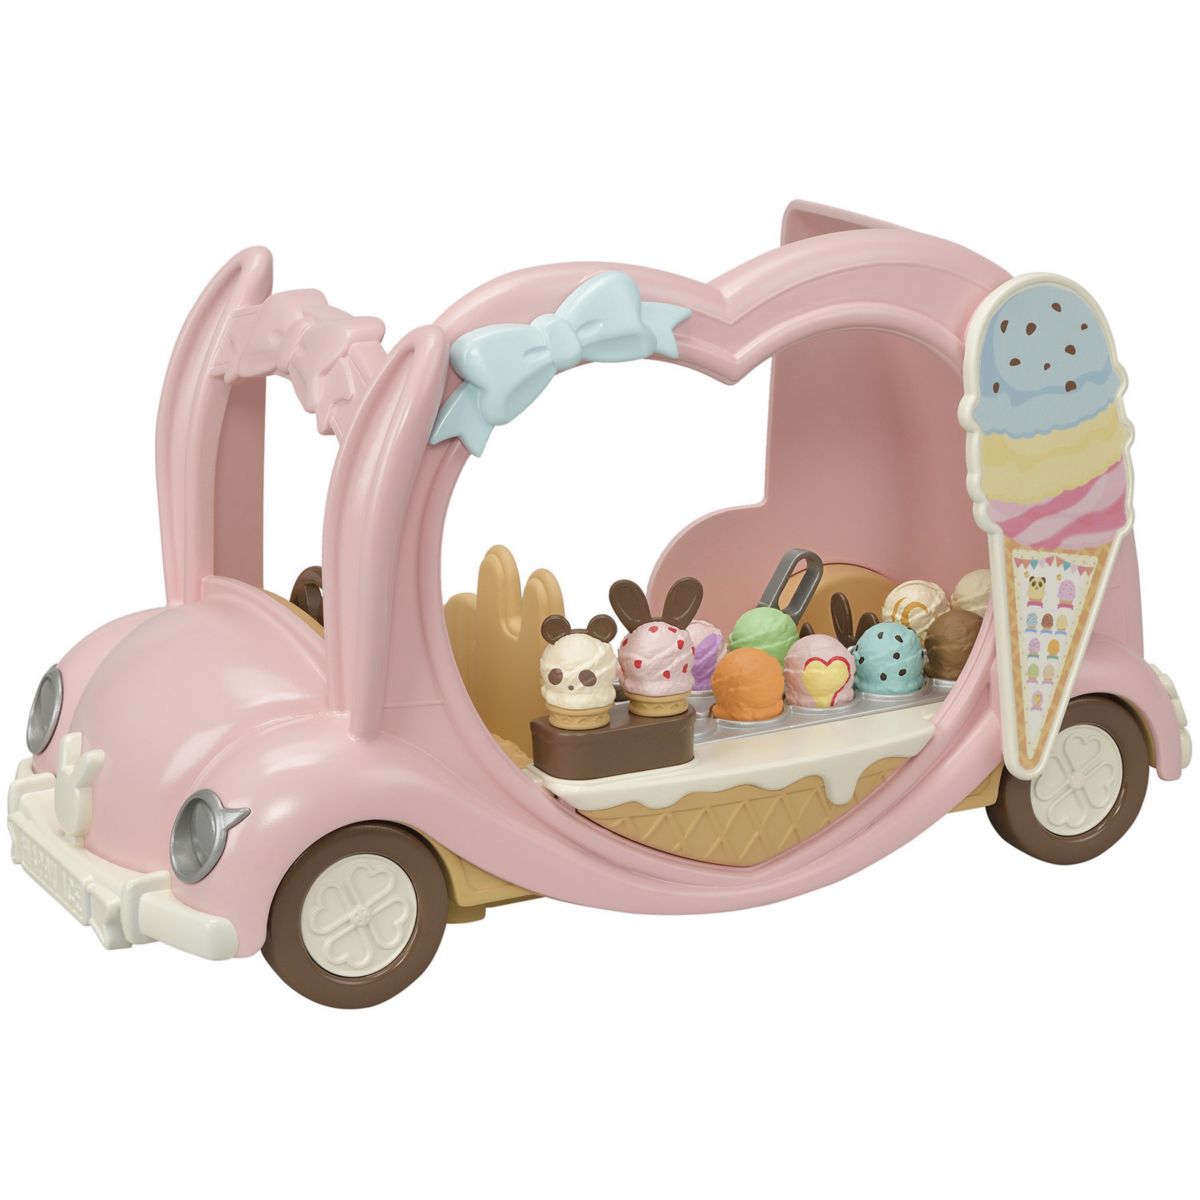 Calico Critters Ice Cream Van Игрушечный автомобиль для кукол Calico Critters